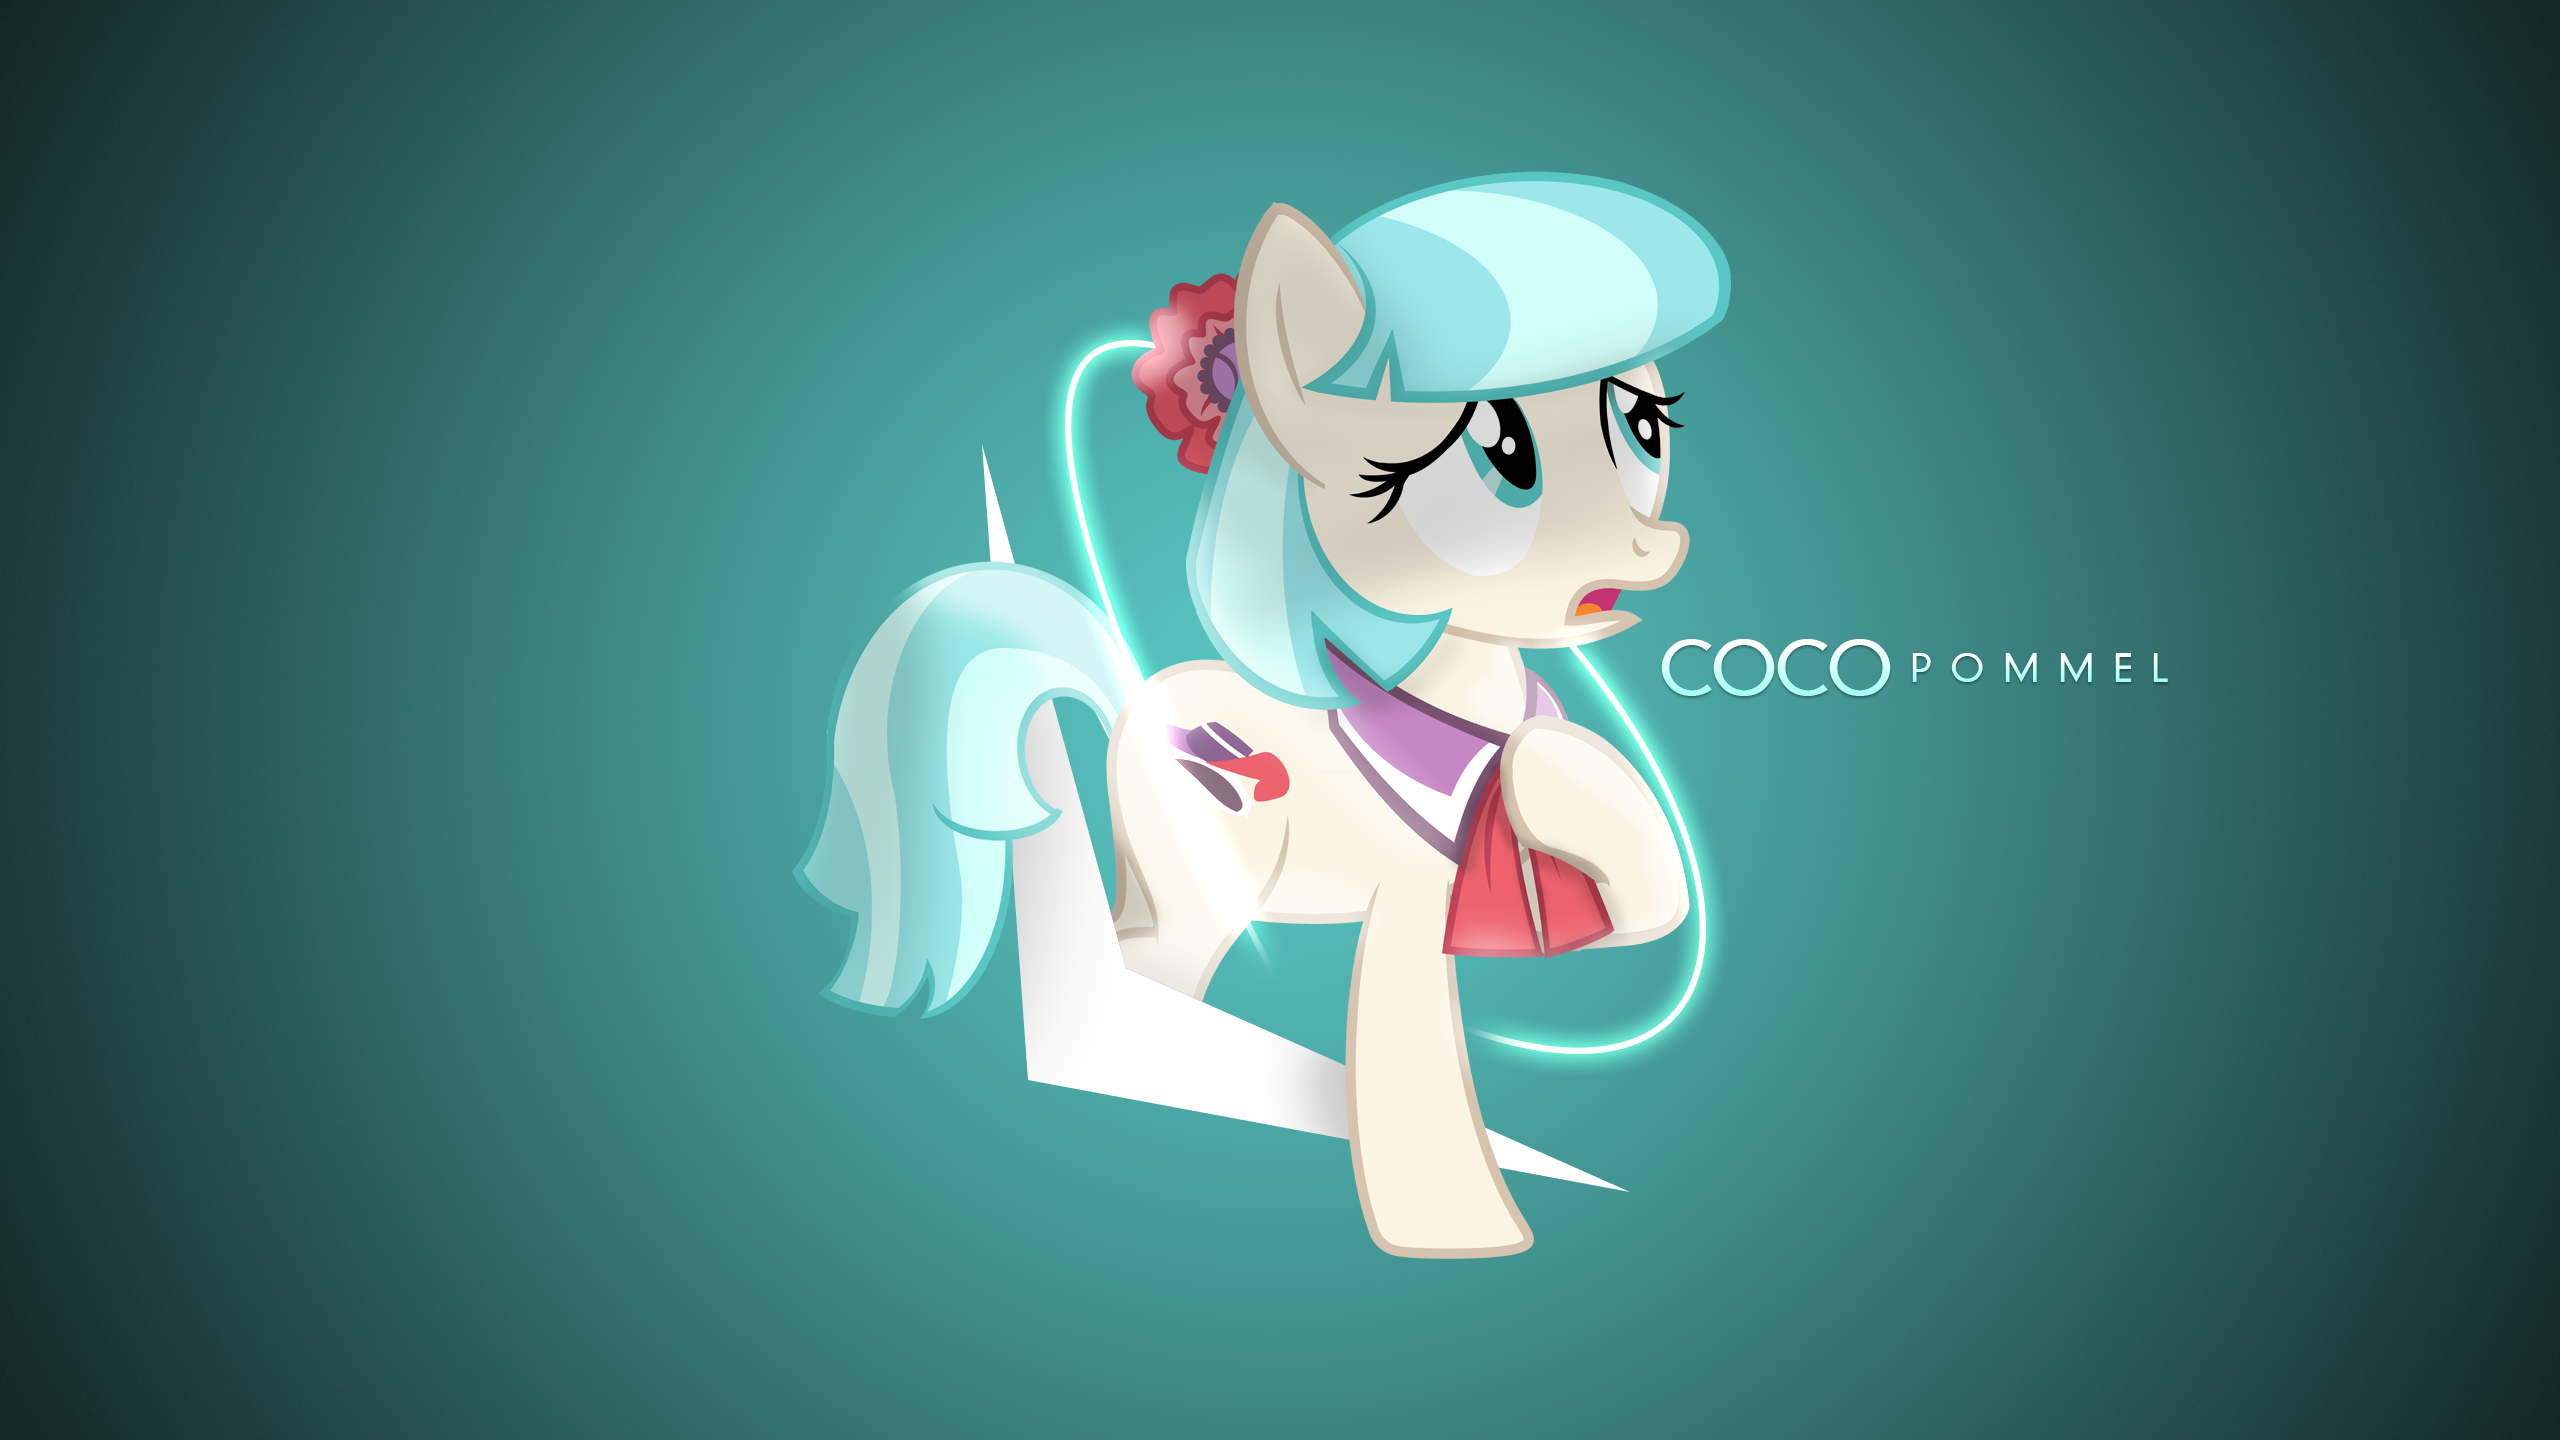 Coco Pommel (Is Best Pony) by Clockwork65 and PixelKitties